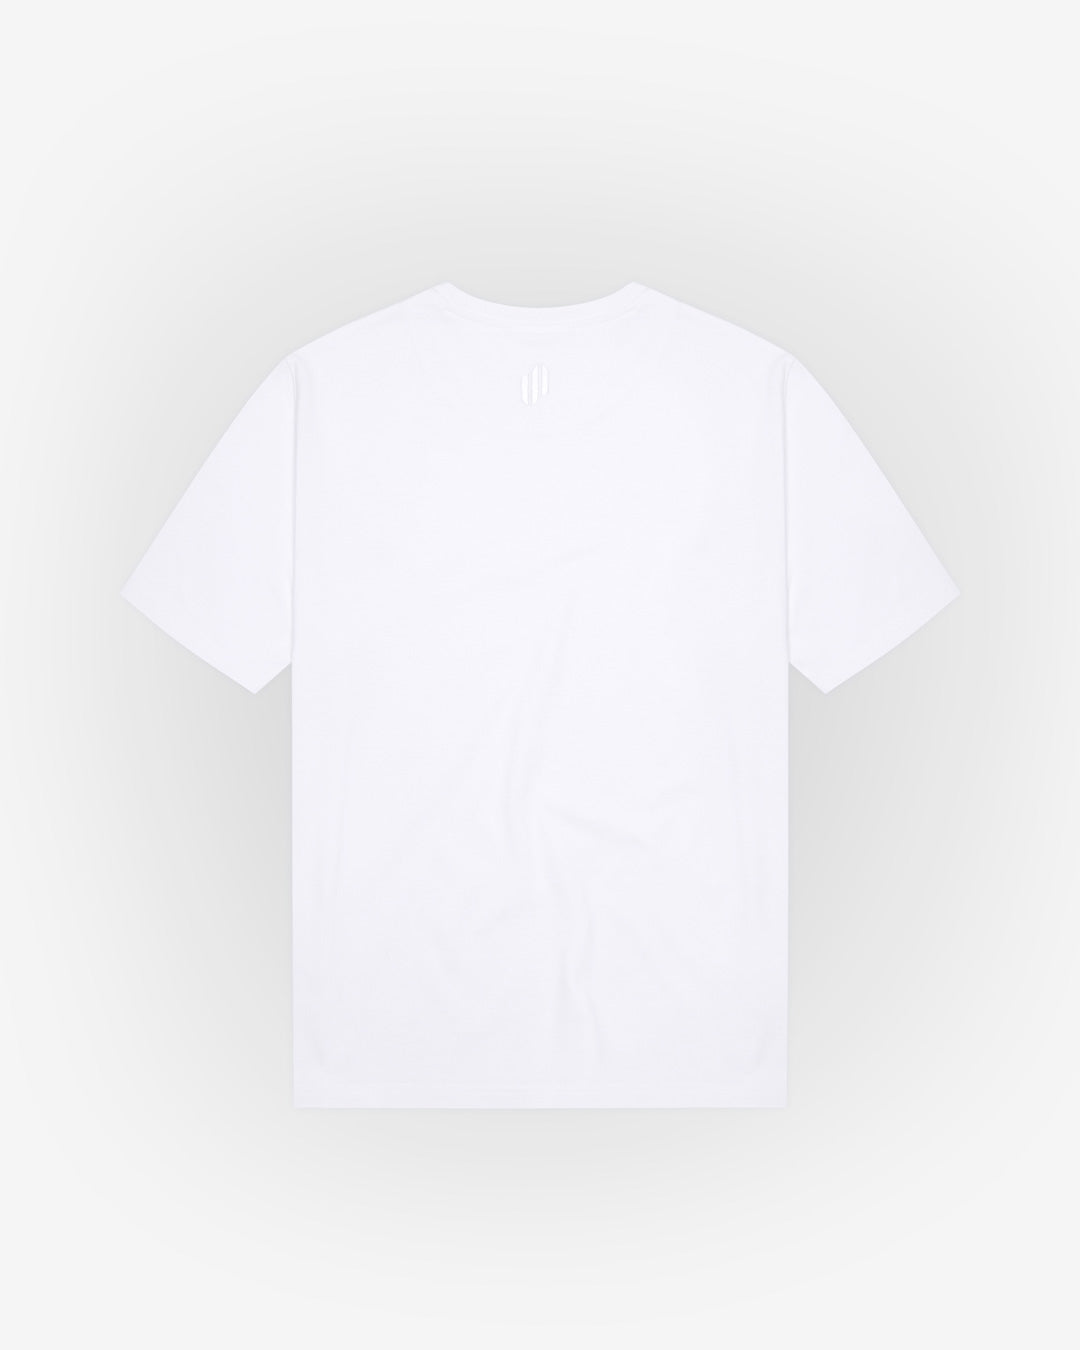 VC: GB-ENG - Vintage White T-Shirt - England